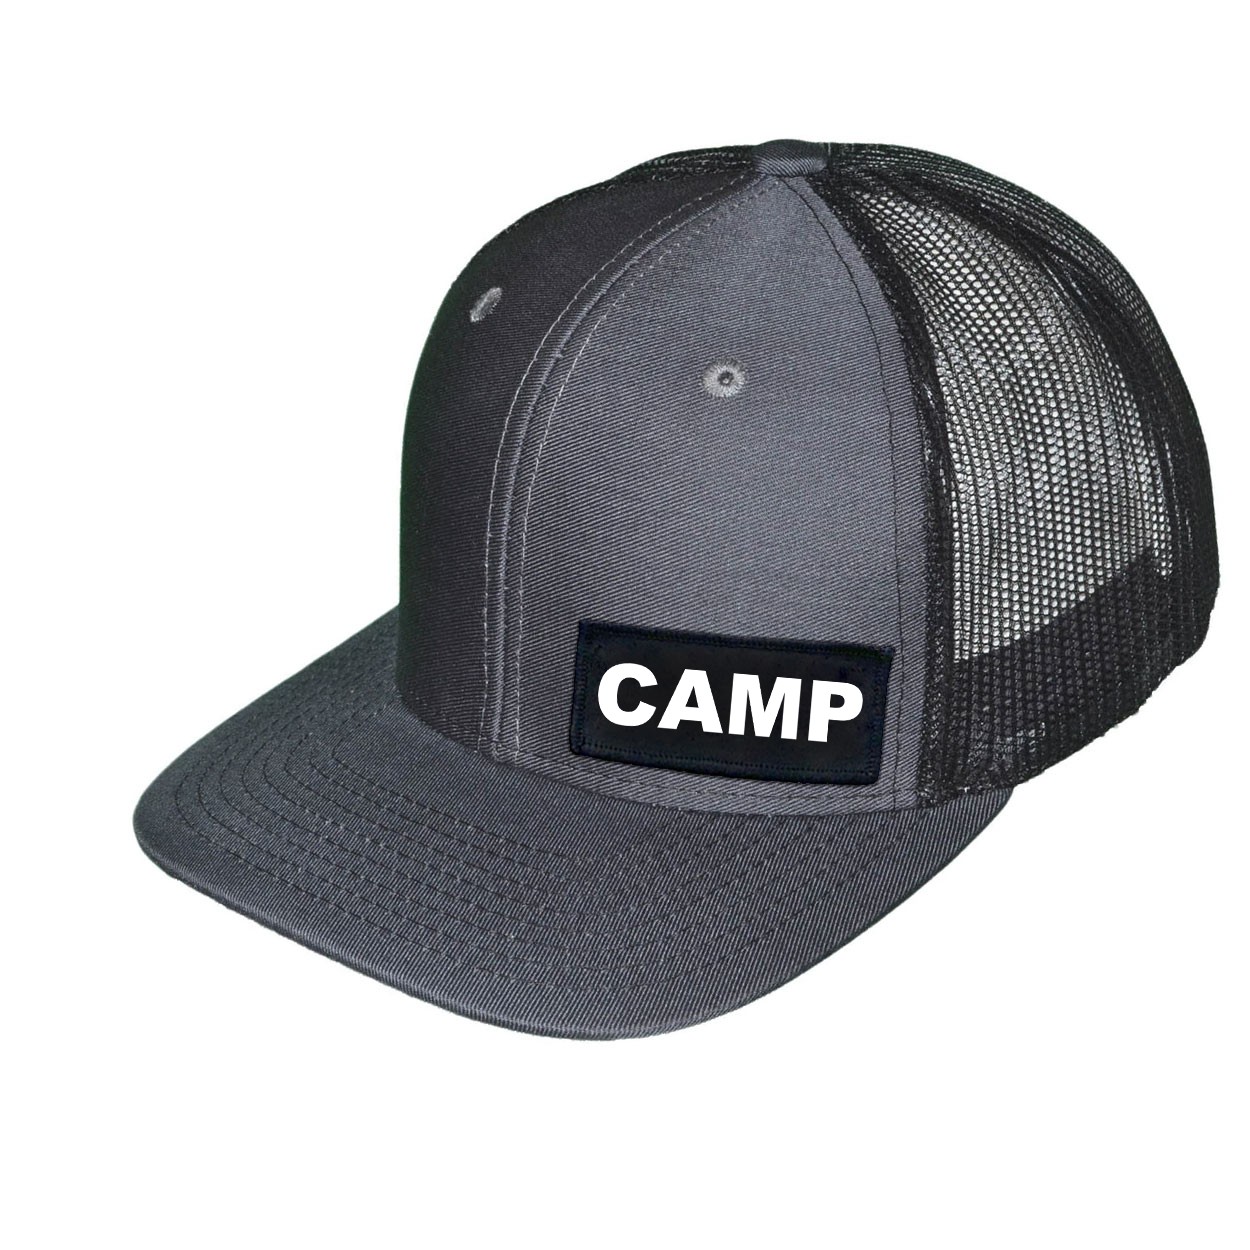 Camp Brand Logo Night Out Woven Patch Snapback Trucker Hat Dark Gray/Black (White Logo)